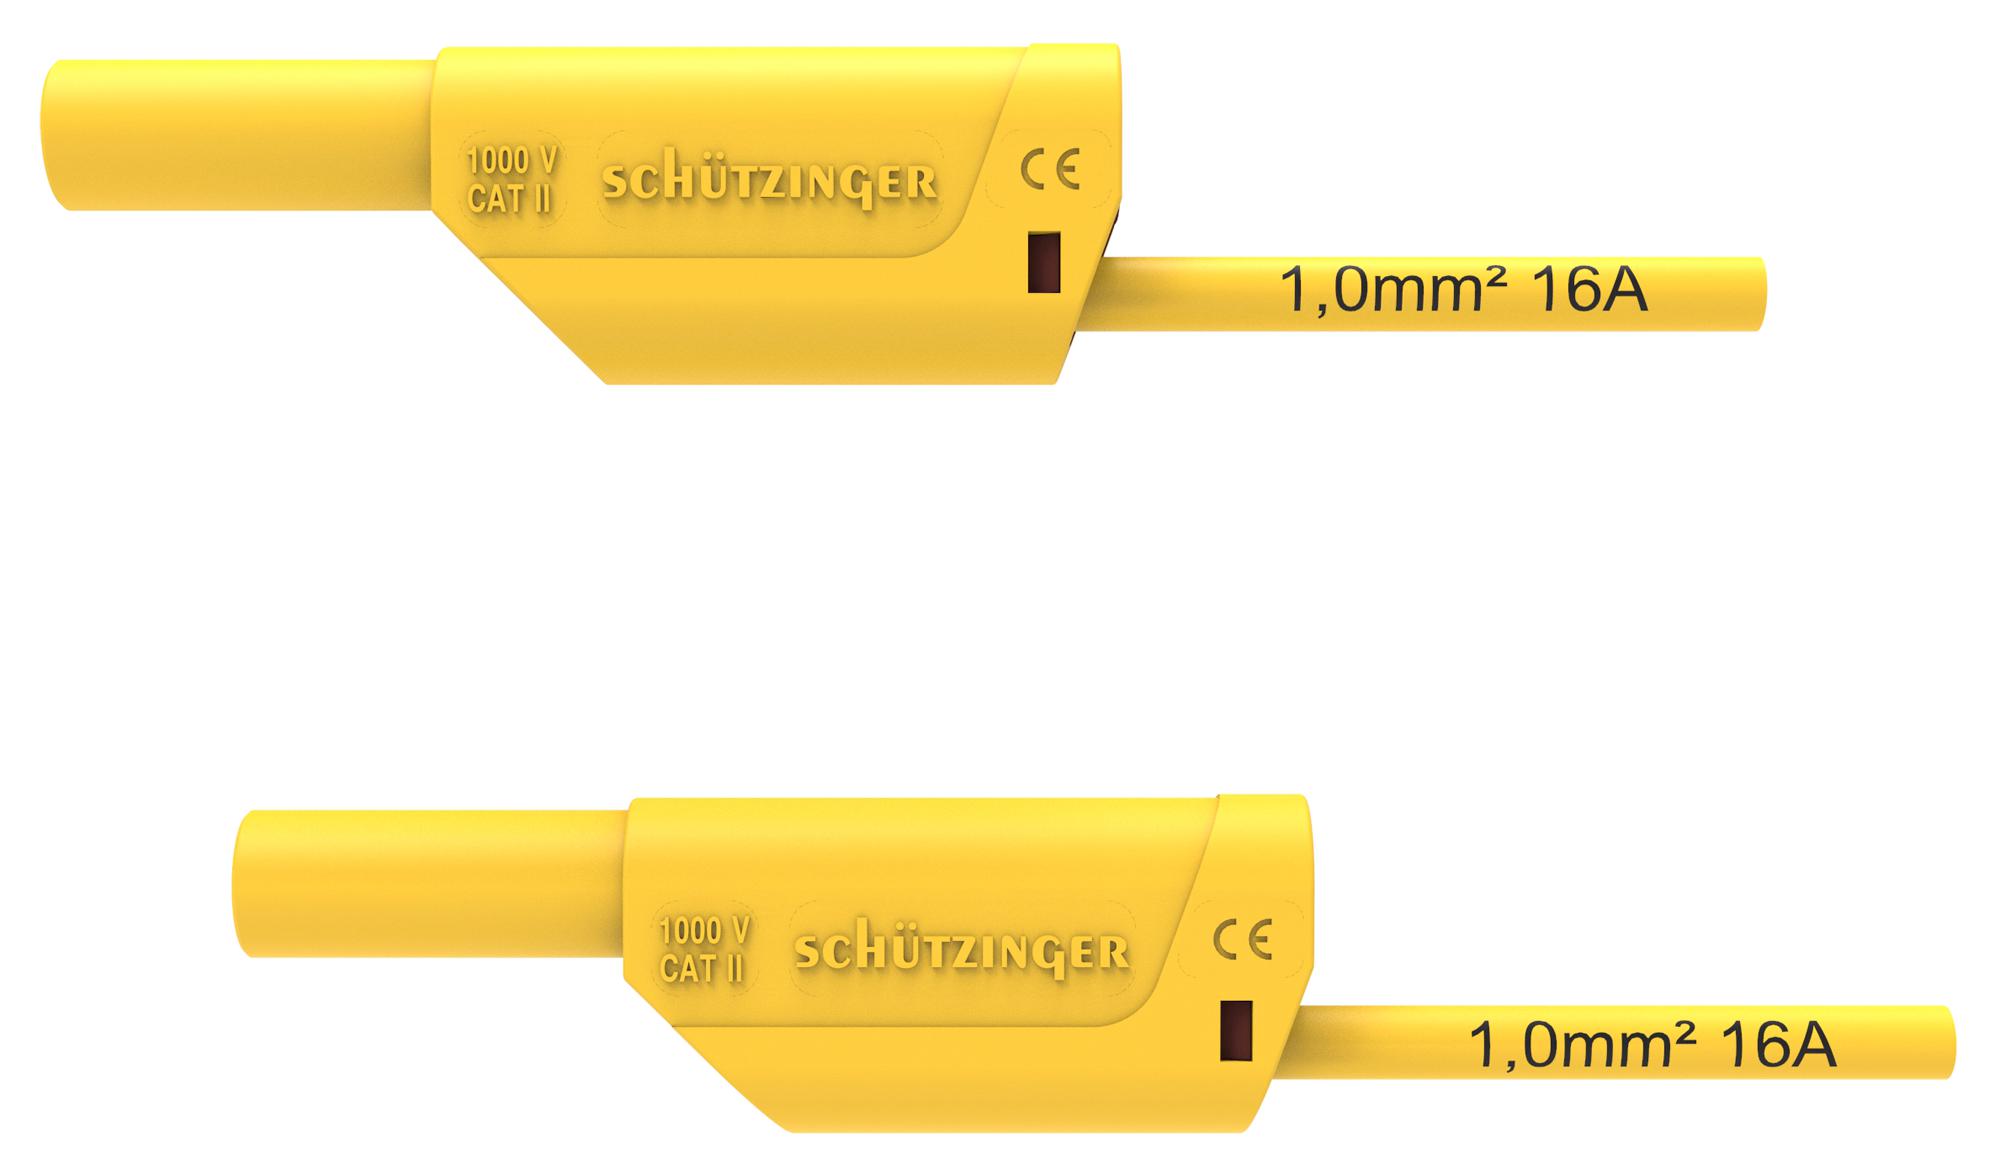 Schutzinger Di Vsfk 8500 / 1 / 200 / Ge 4mm Banana Plug-Sq, Shrouded, Yellow, 2M